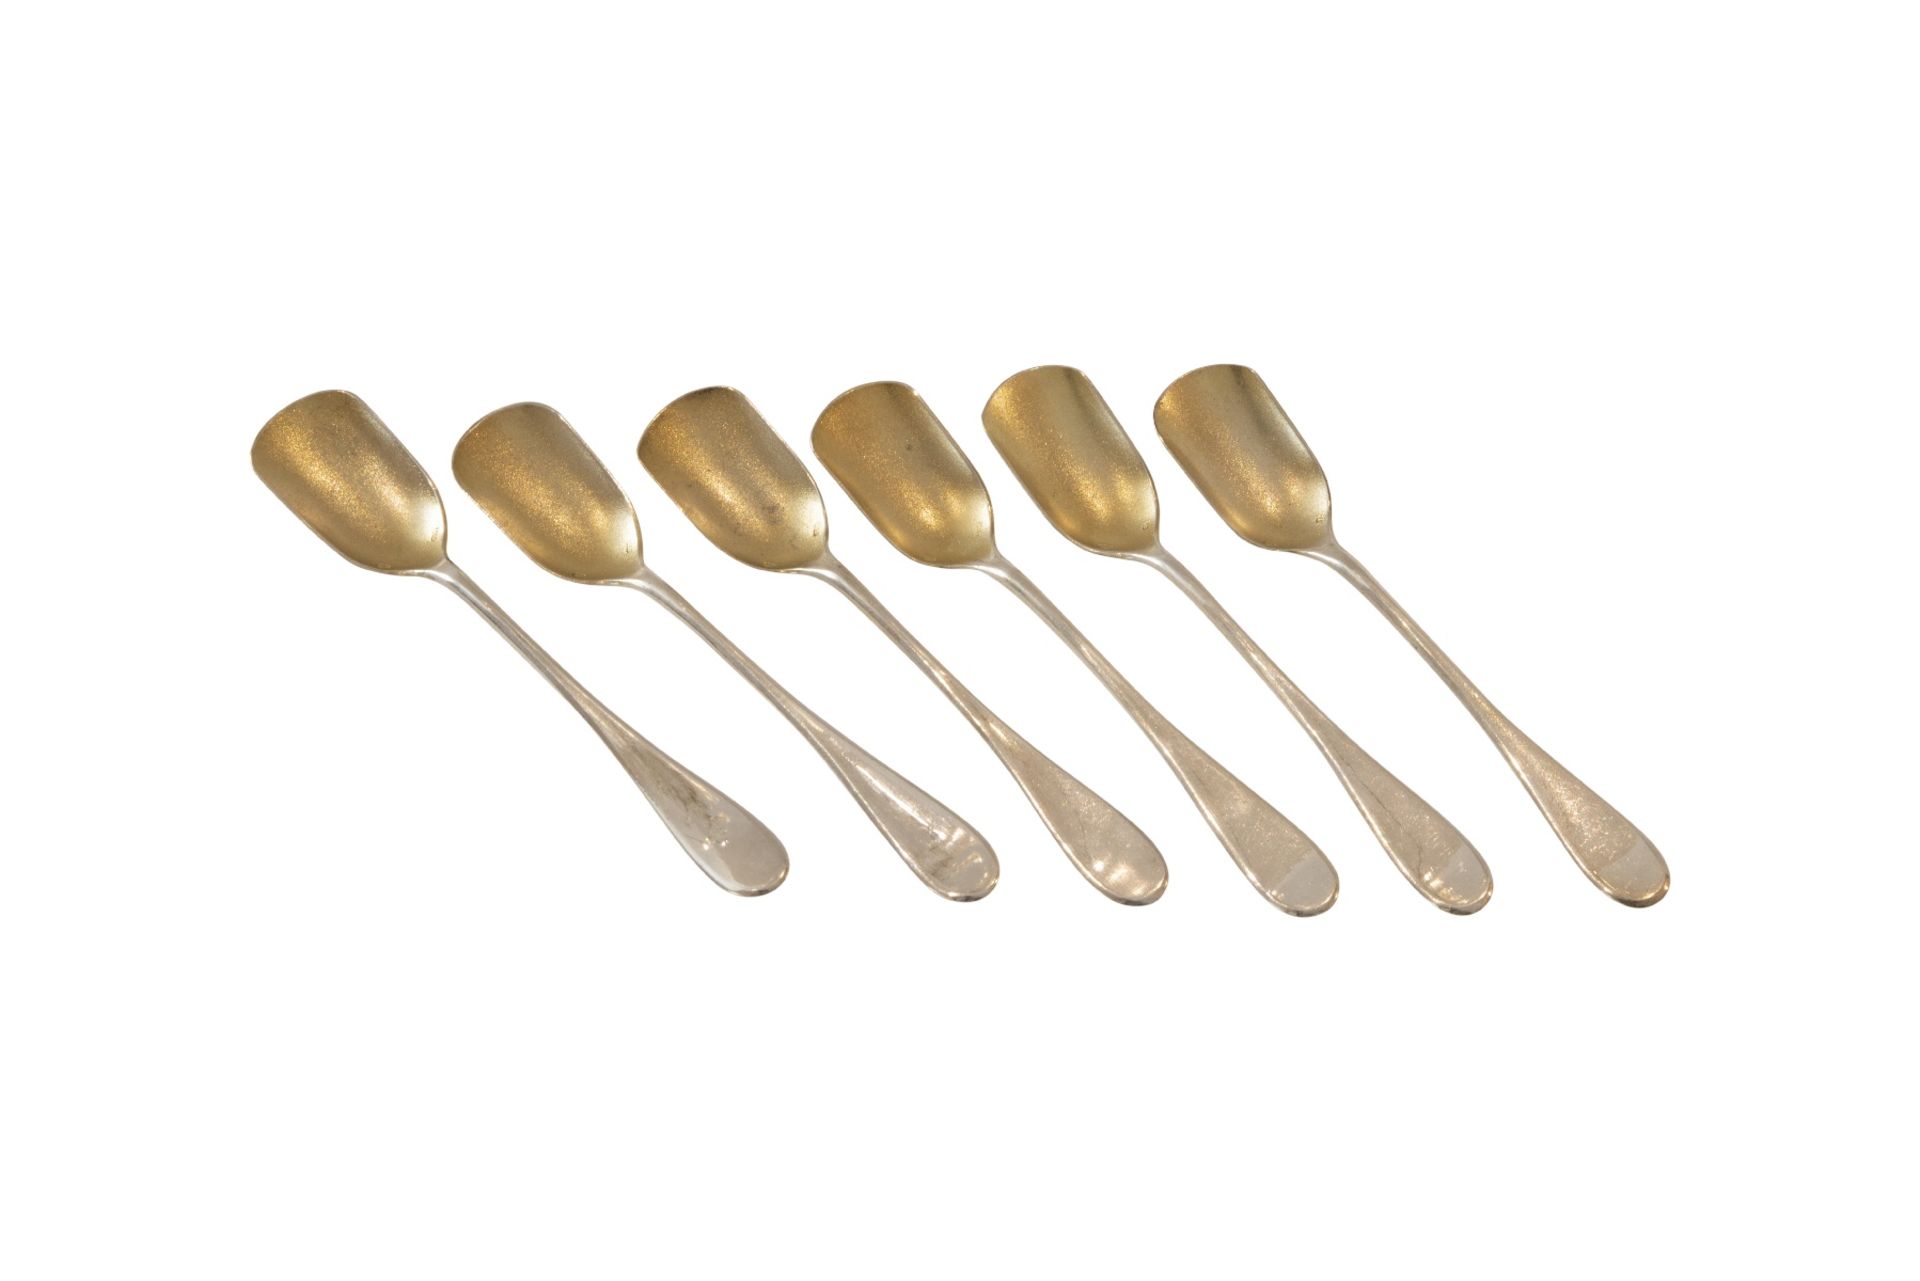 Sechs Eisloeffel | Six Ice Cream Spoons